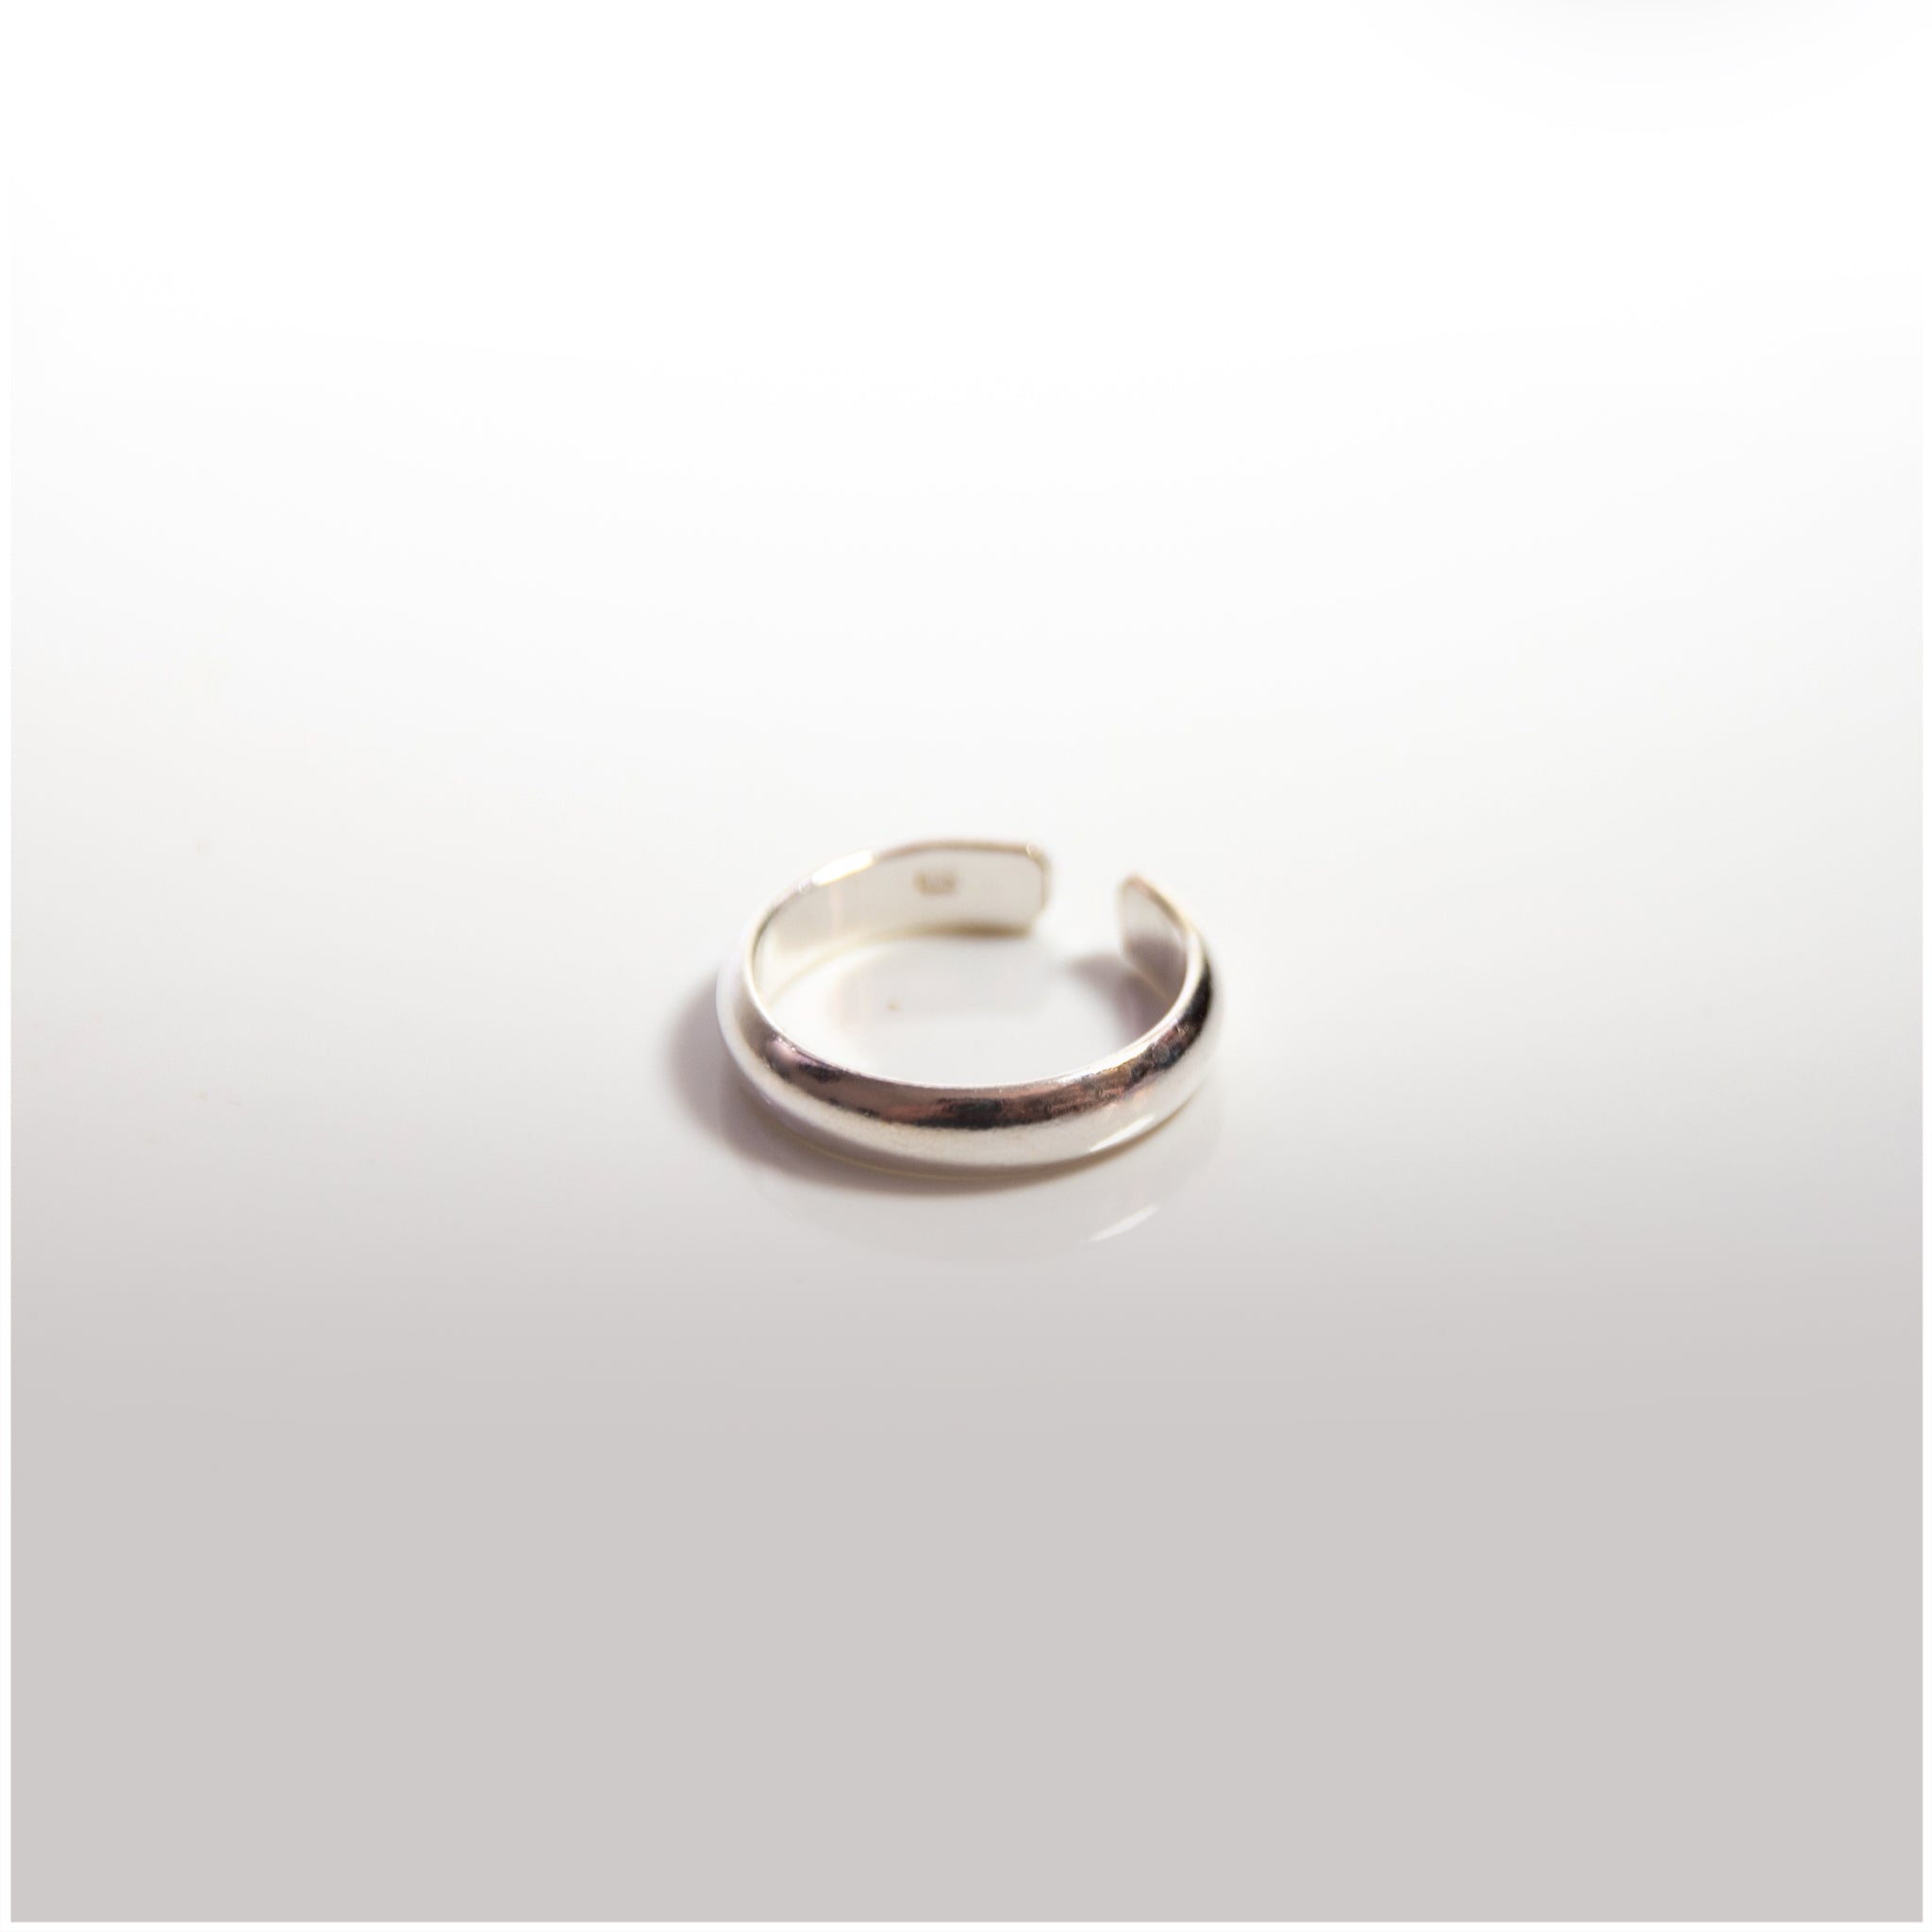 TTR003 - Sterling Silver Toe Ring